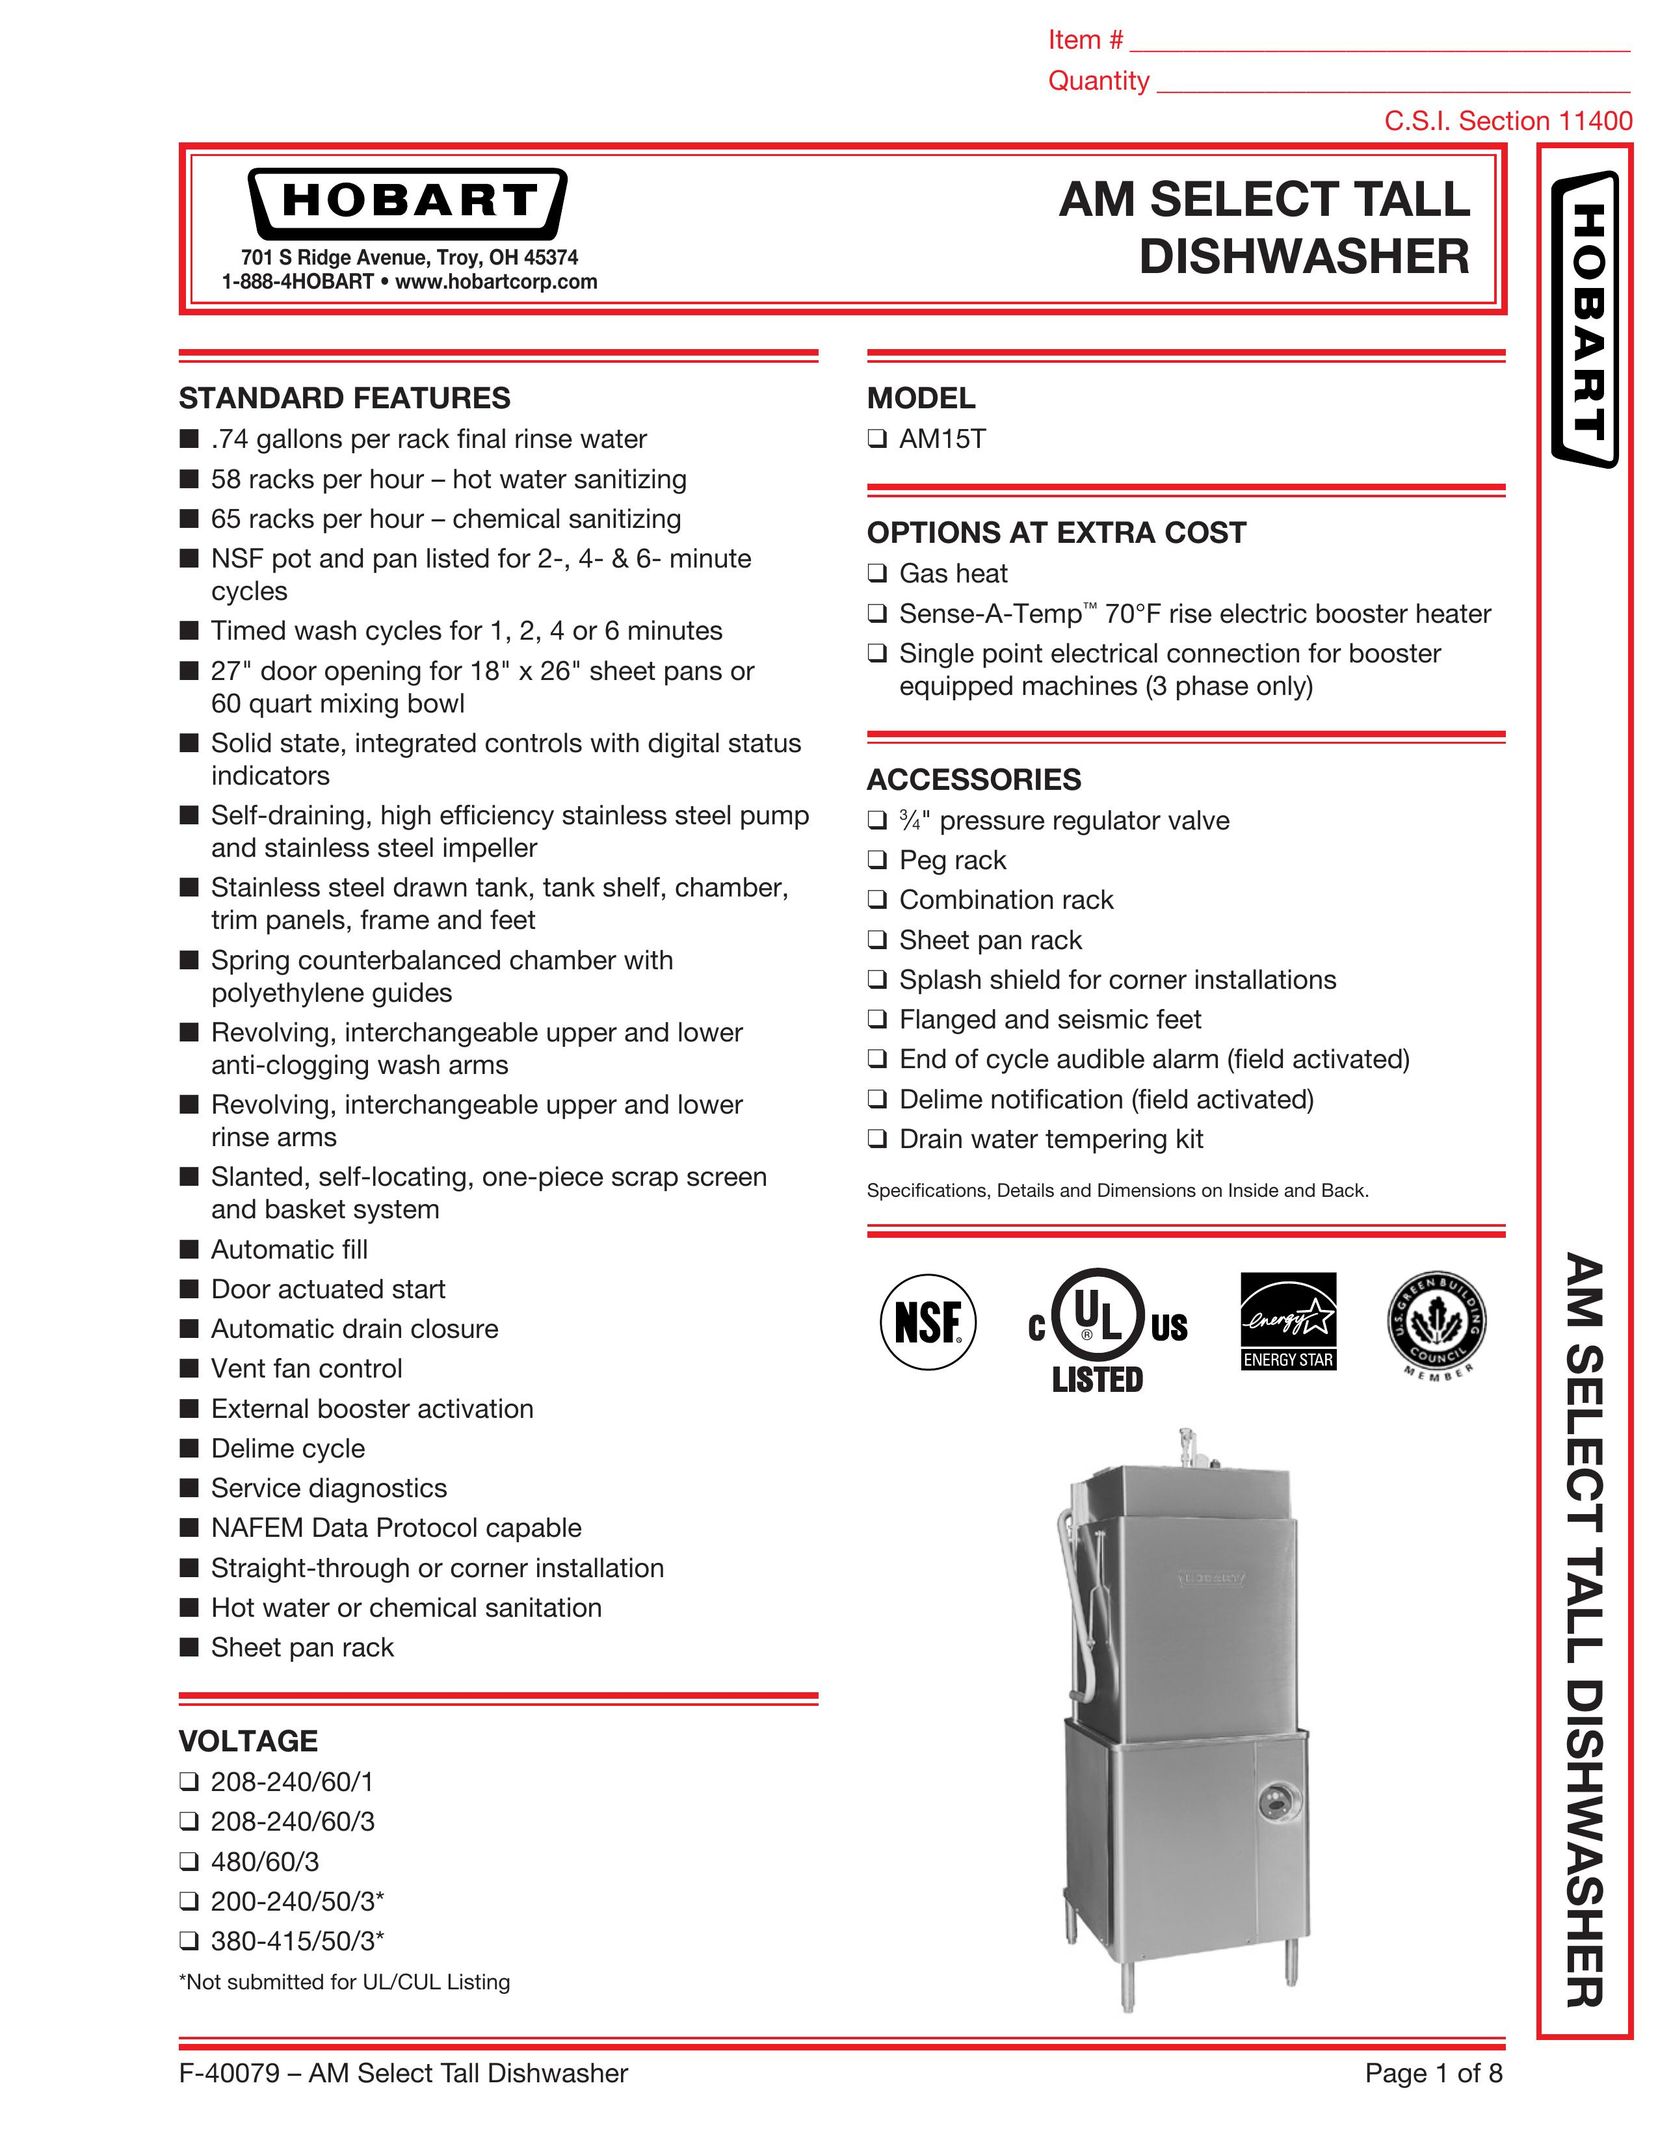 Hobart 200-240/60/3* Dishwasher User Manual